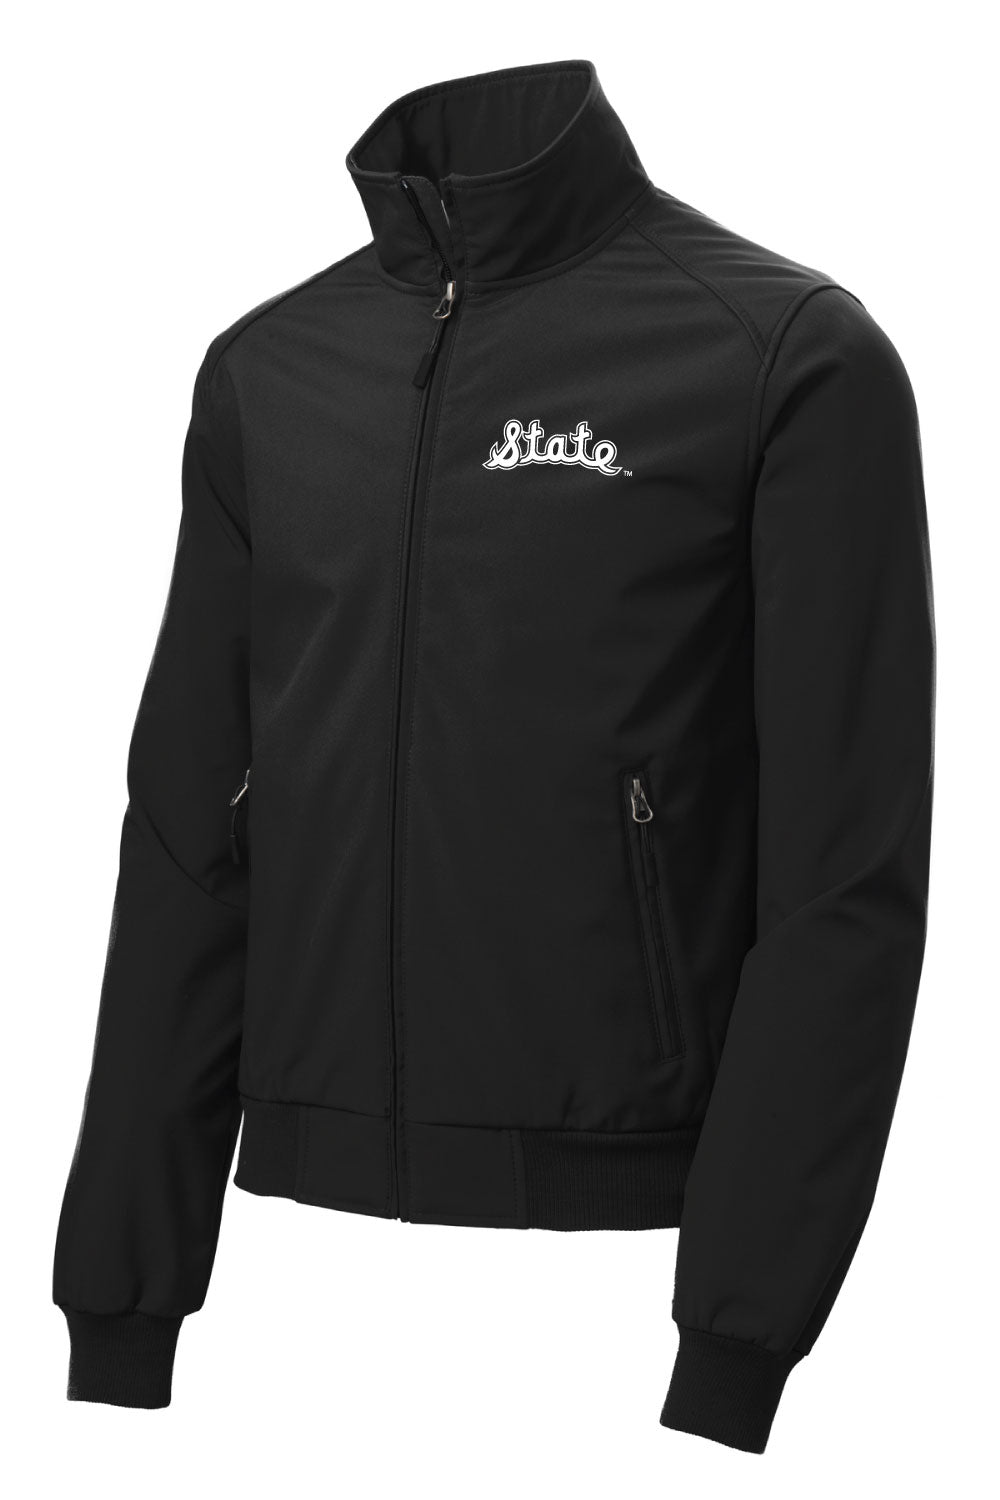 Black Michigan State bomber jacket with white "State" script logo